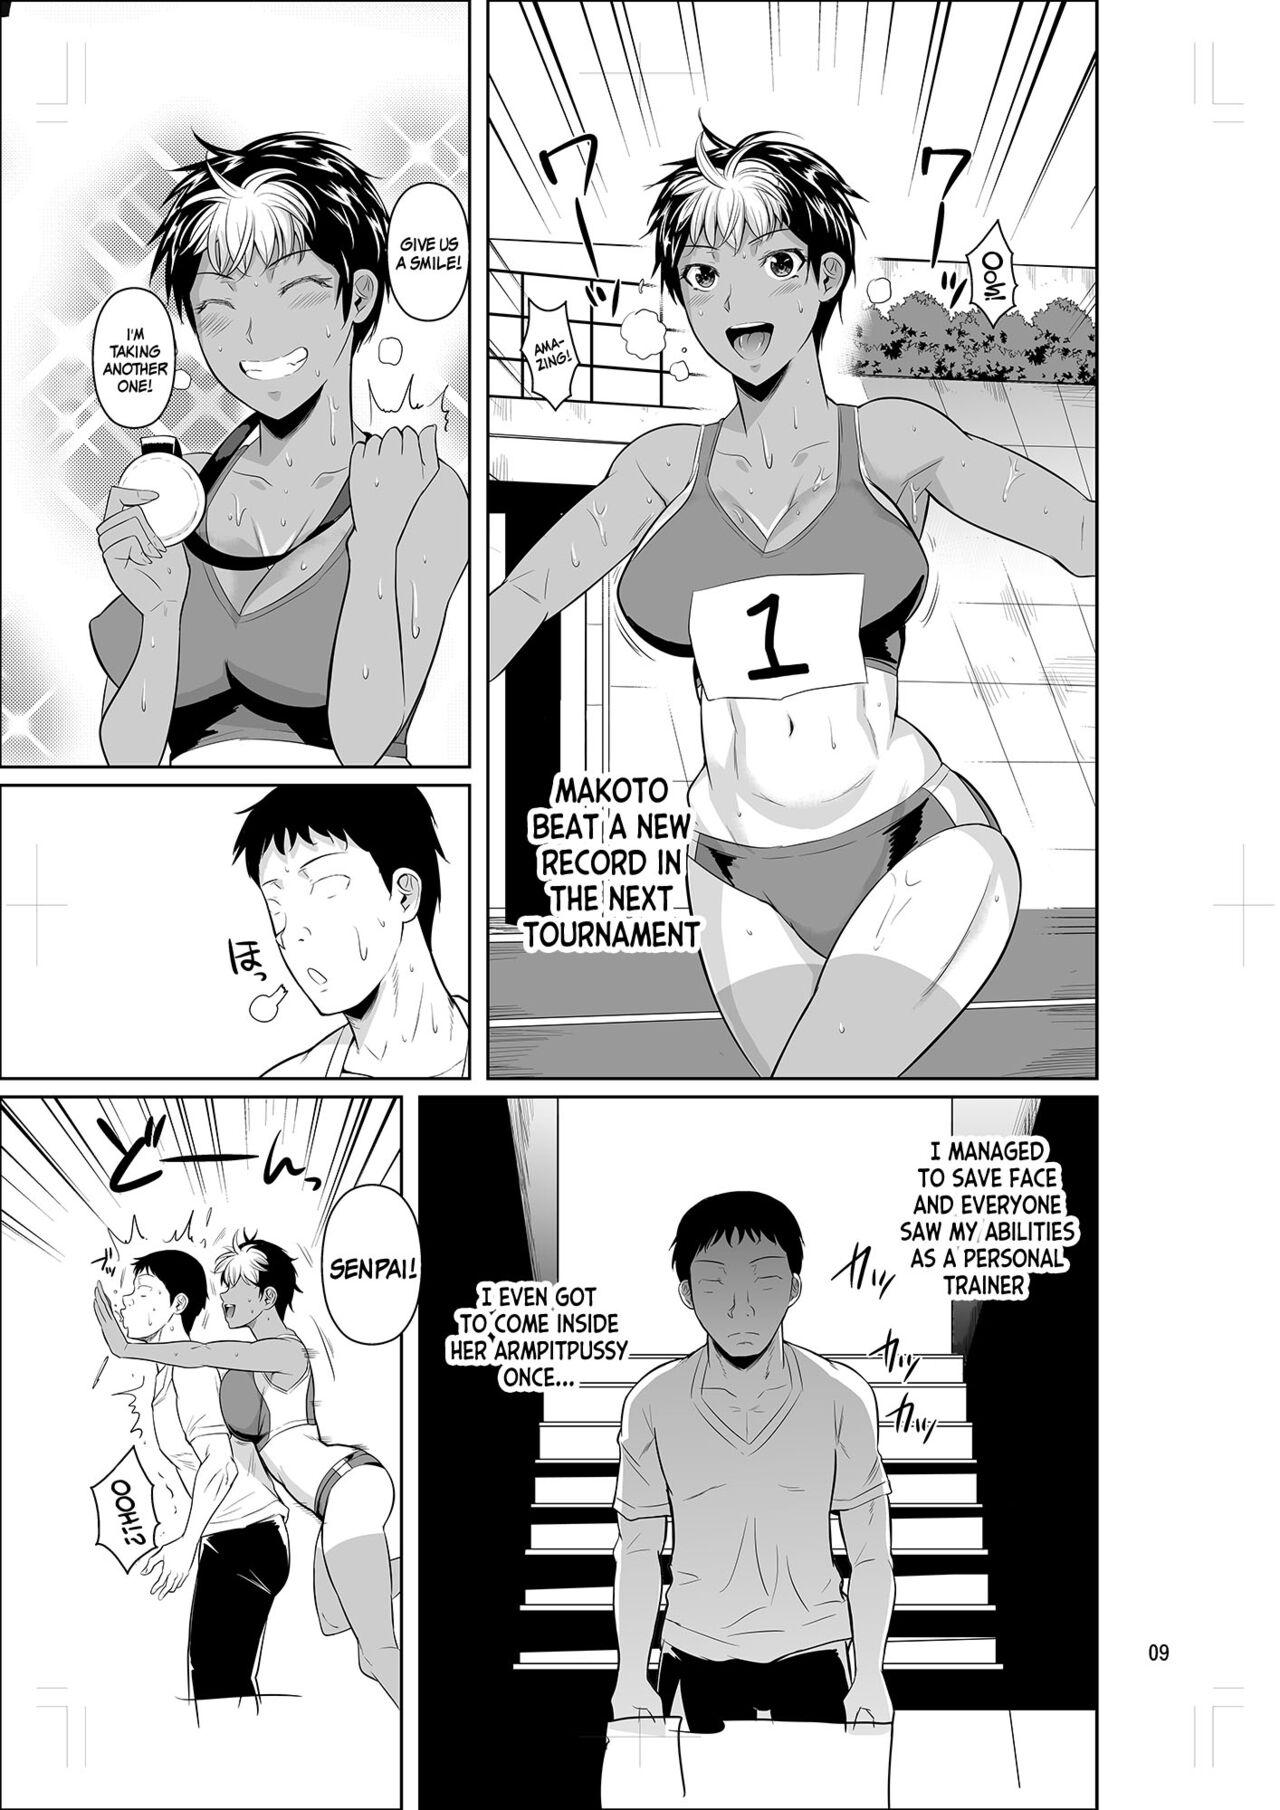 Latin Asex Training dakara Mondainai desu | It's Asexual Training So There's No Problem - Original 18yo - Page 10